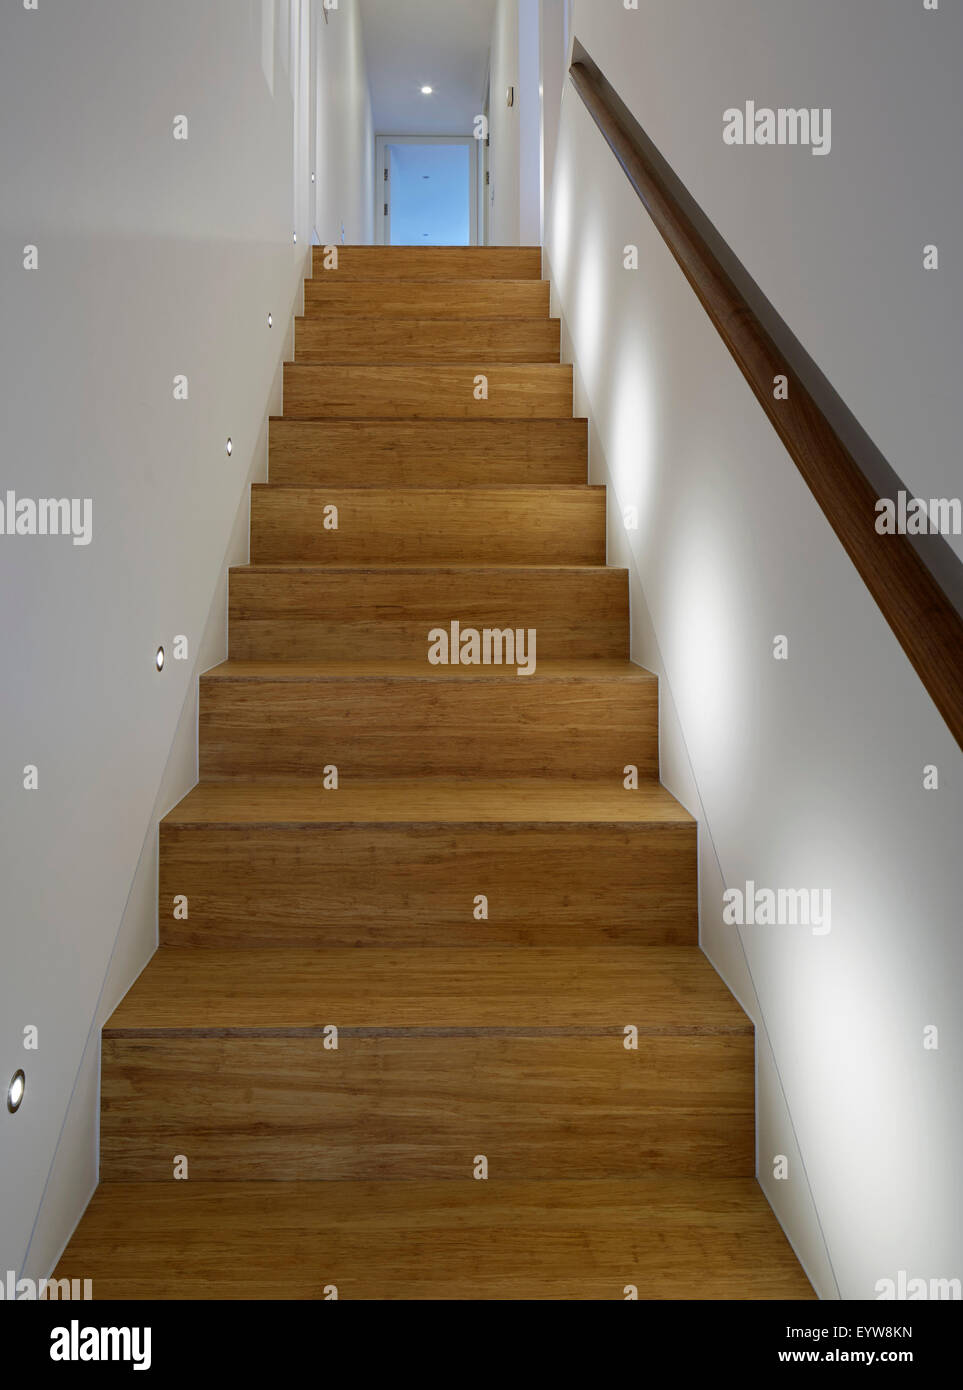 Wooden stairway. London Brownstones, London, United Kingdom. Architect: Knox Bhavan Architects LLP, 2014. Stock Photo